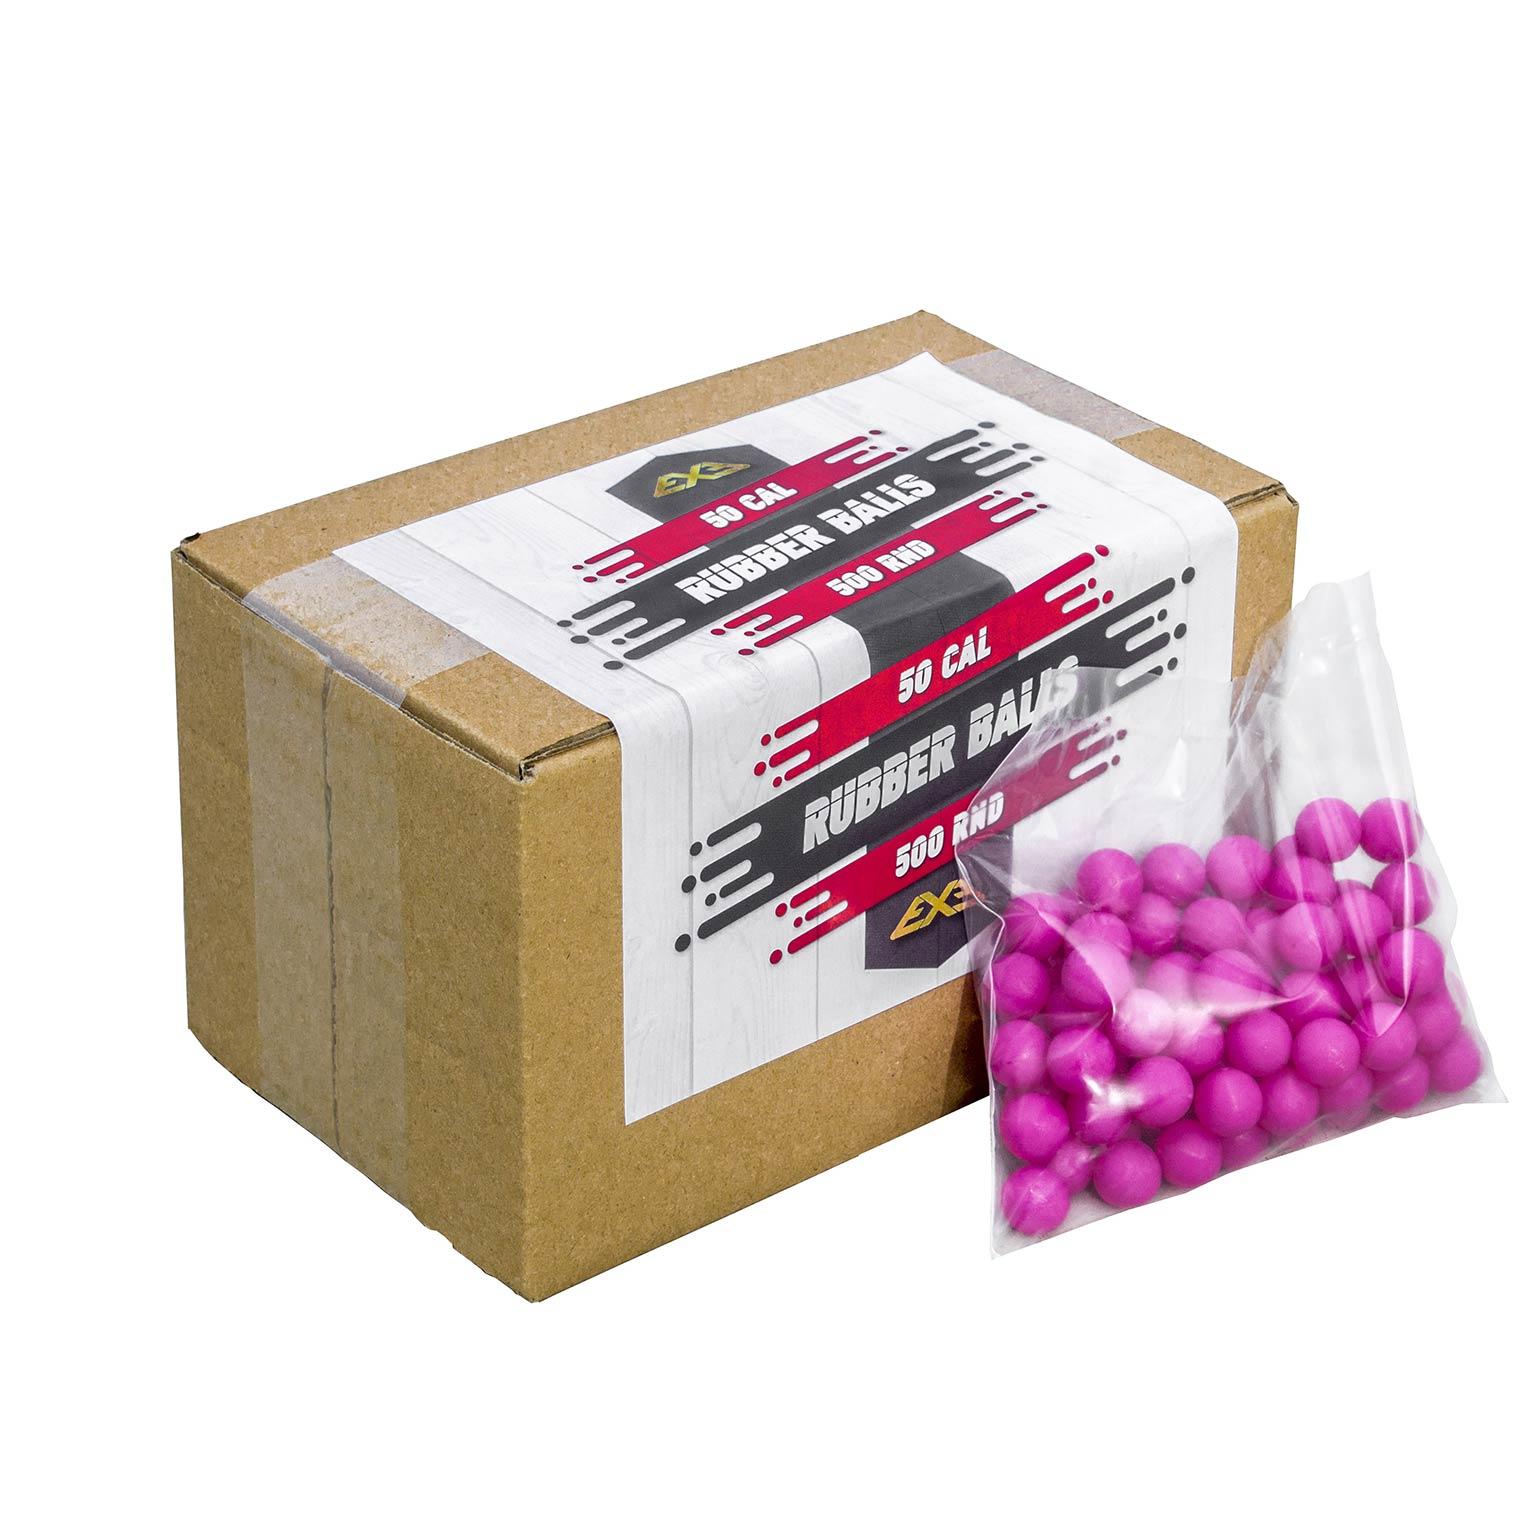 Rubber Balls Cal. 50 Pink - 500 pack